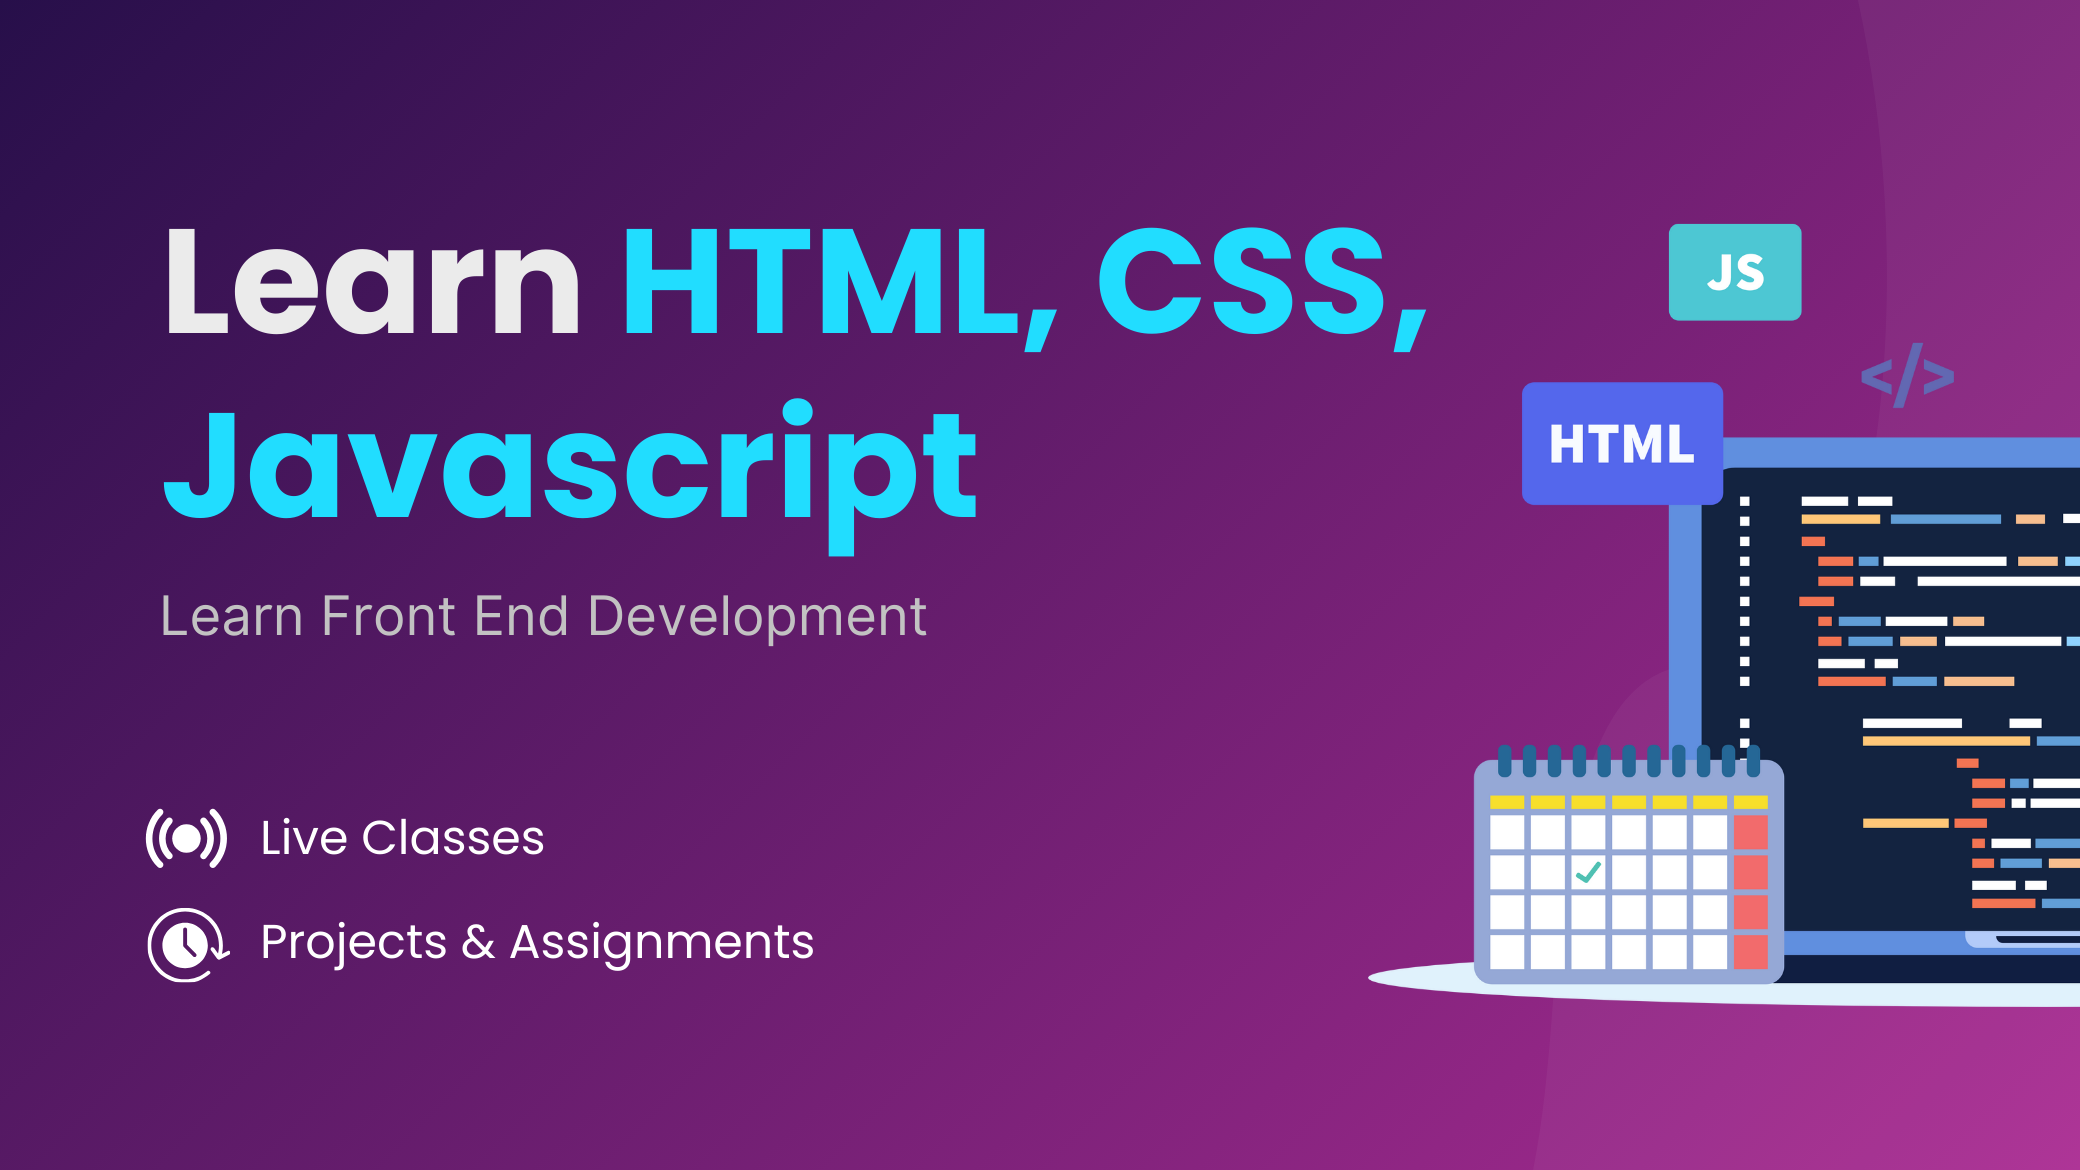 Learn HTML, CSS, Javascript